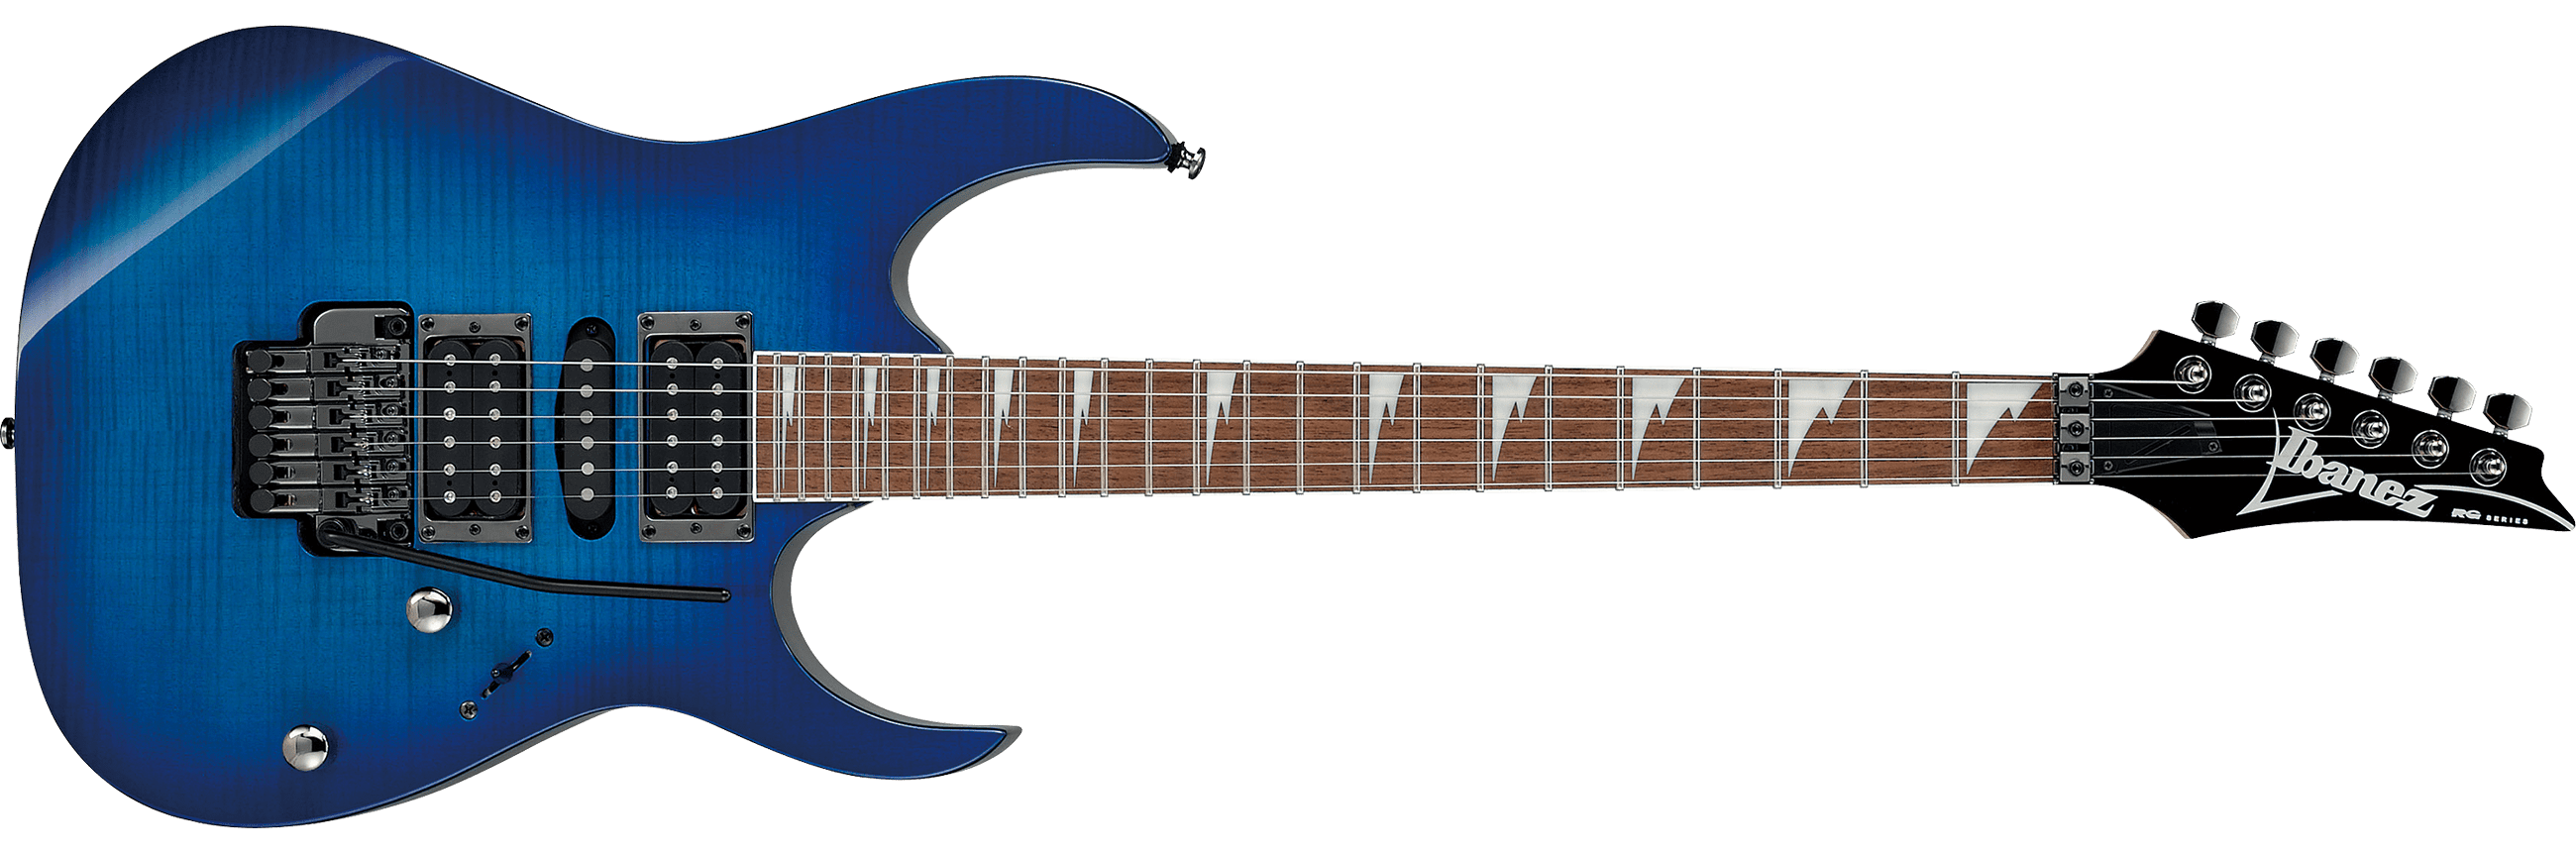 Double-Neck Guitar Transparent Background